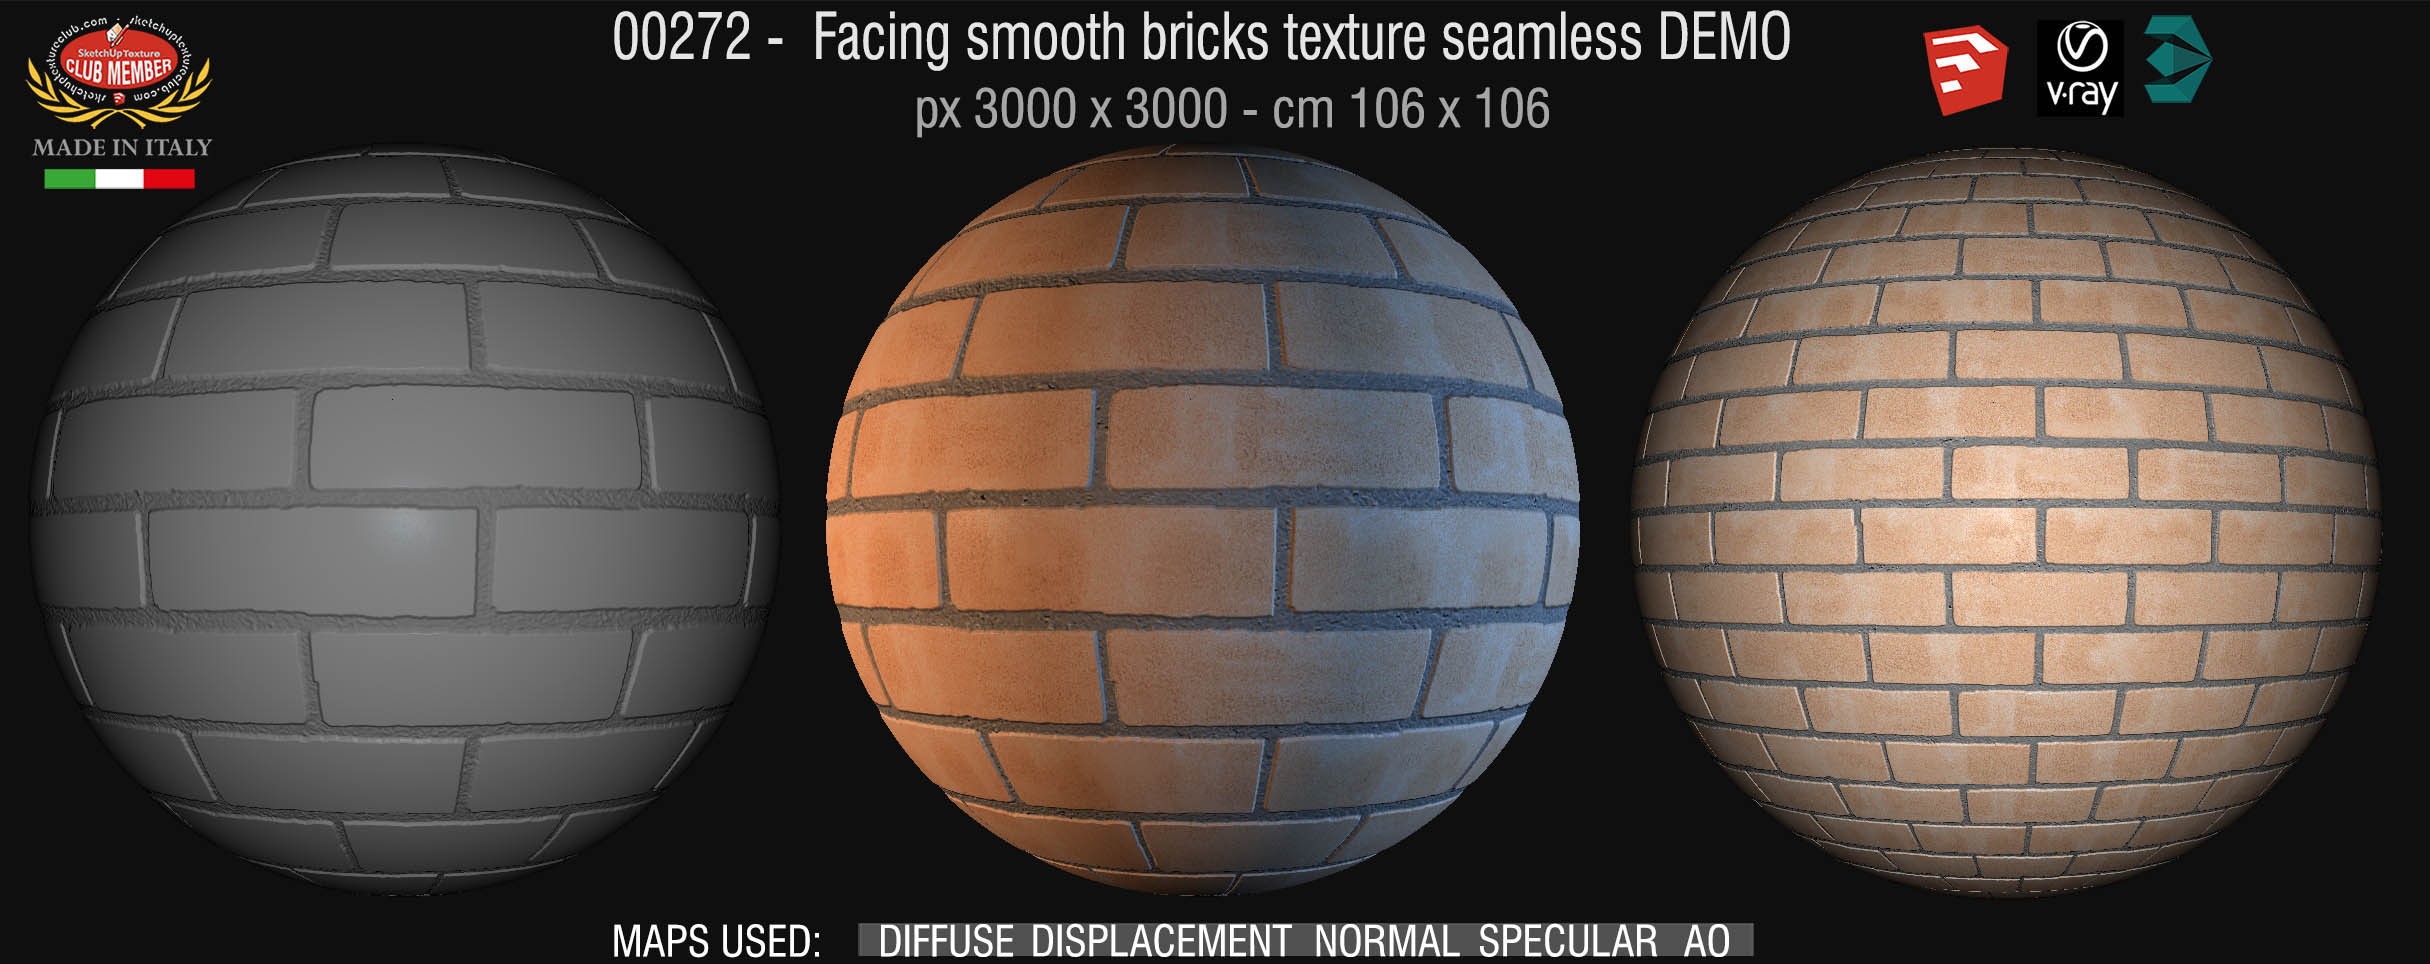 00272 Facing smooth bricks texture seamless + maps DEMO